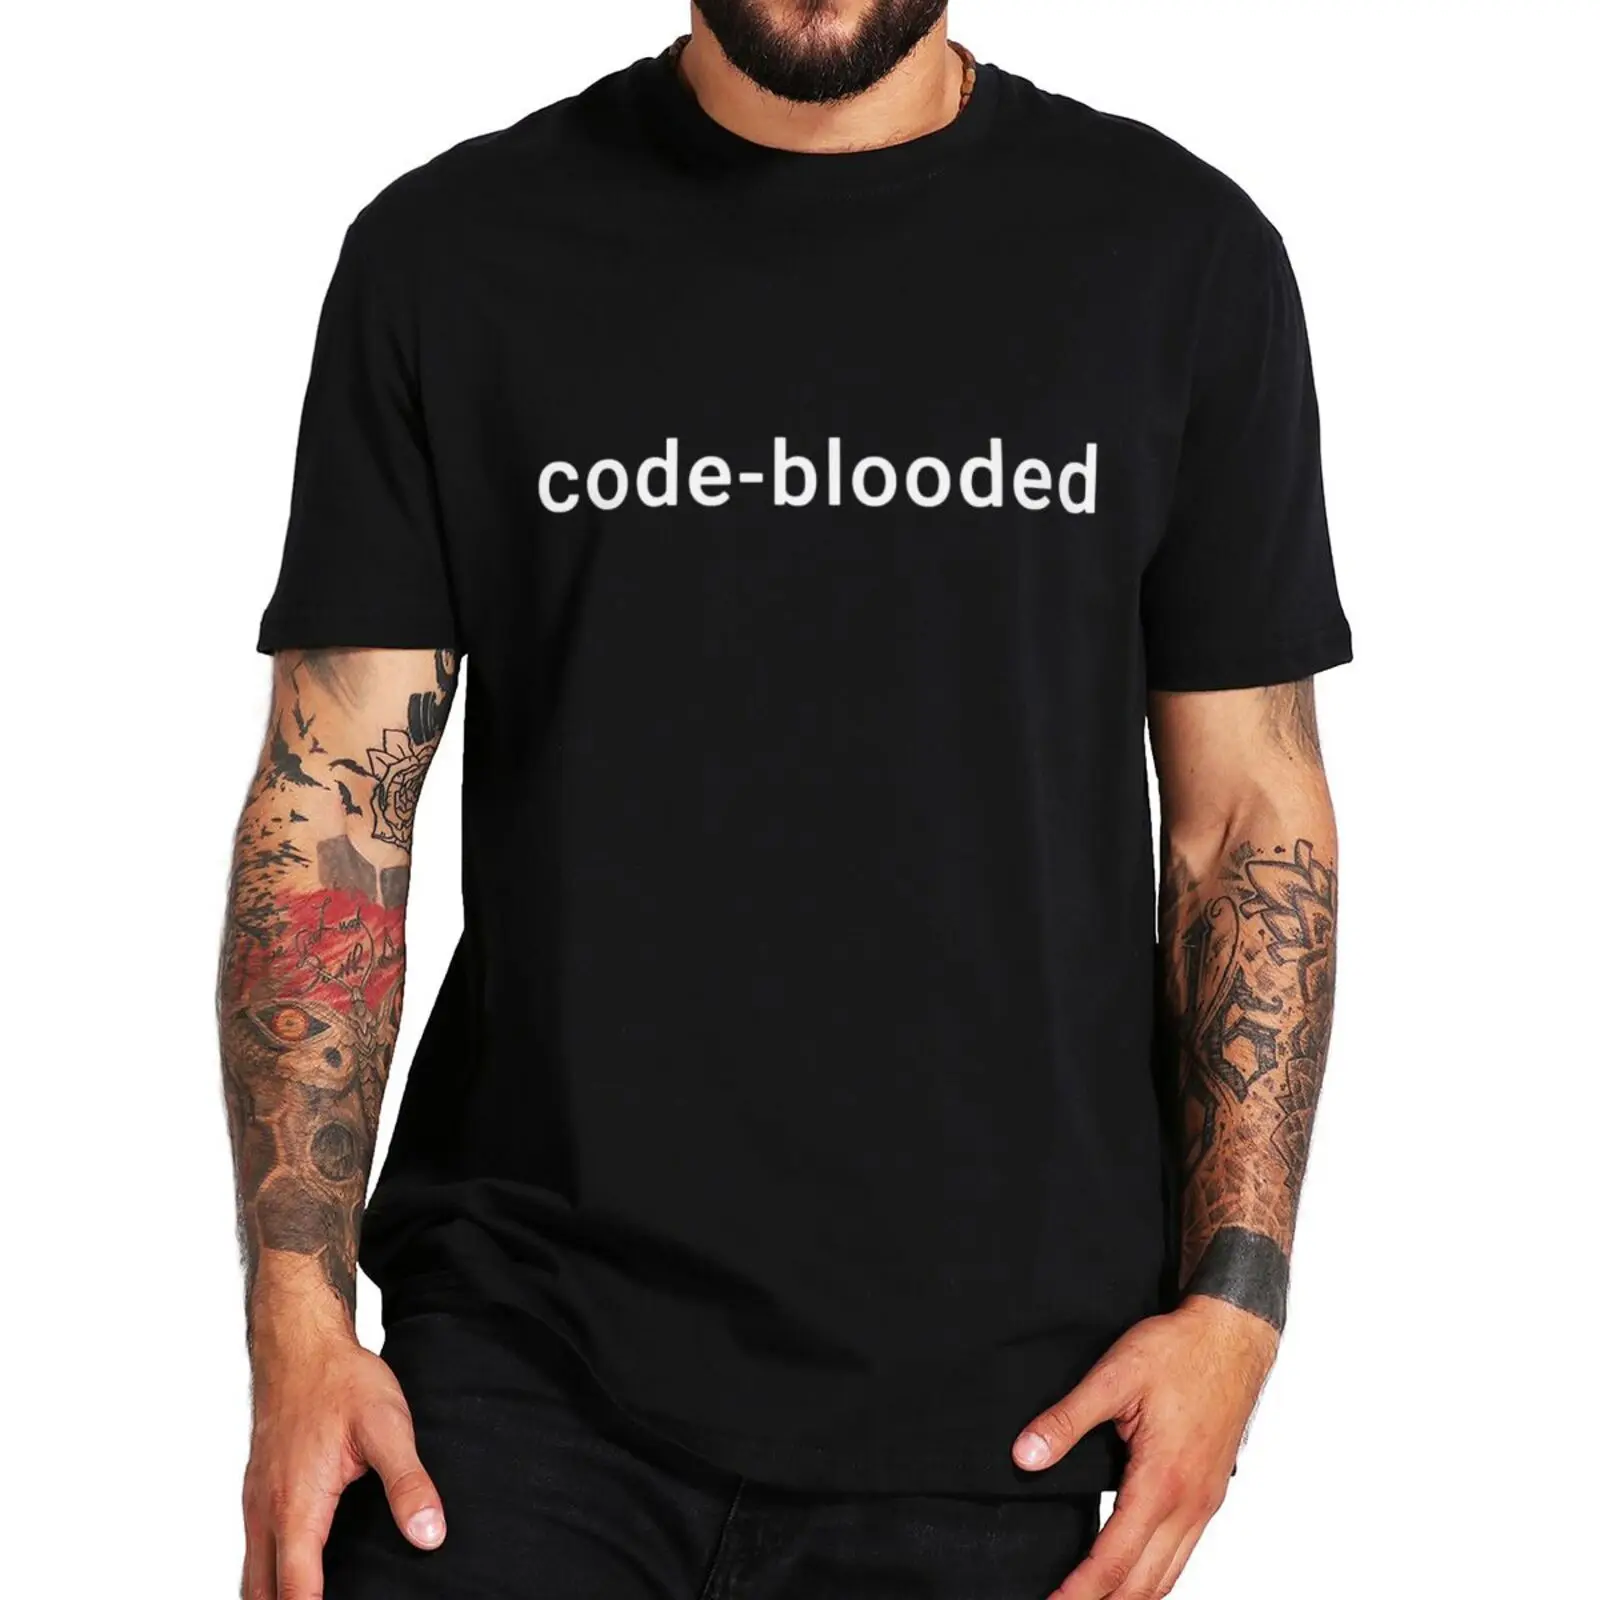 

Code-Blooded T Shirt Programmer Computer Science Geek Gift Men Women Tshirts Casual Soft Cotton Tee Tops EU Size